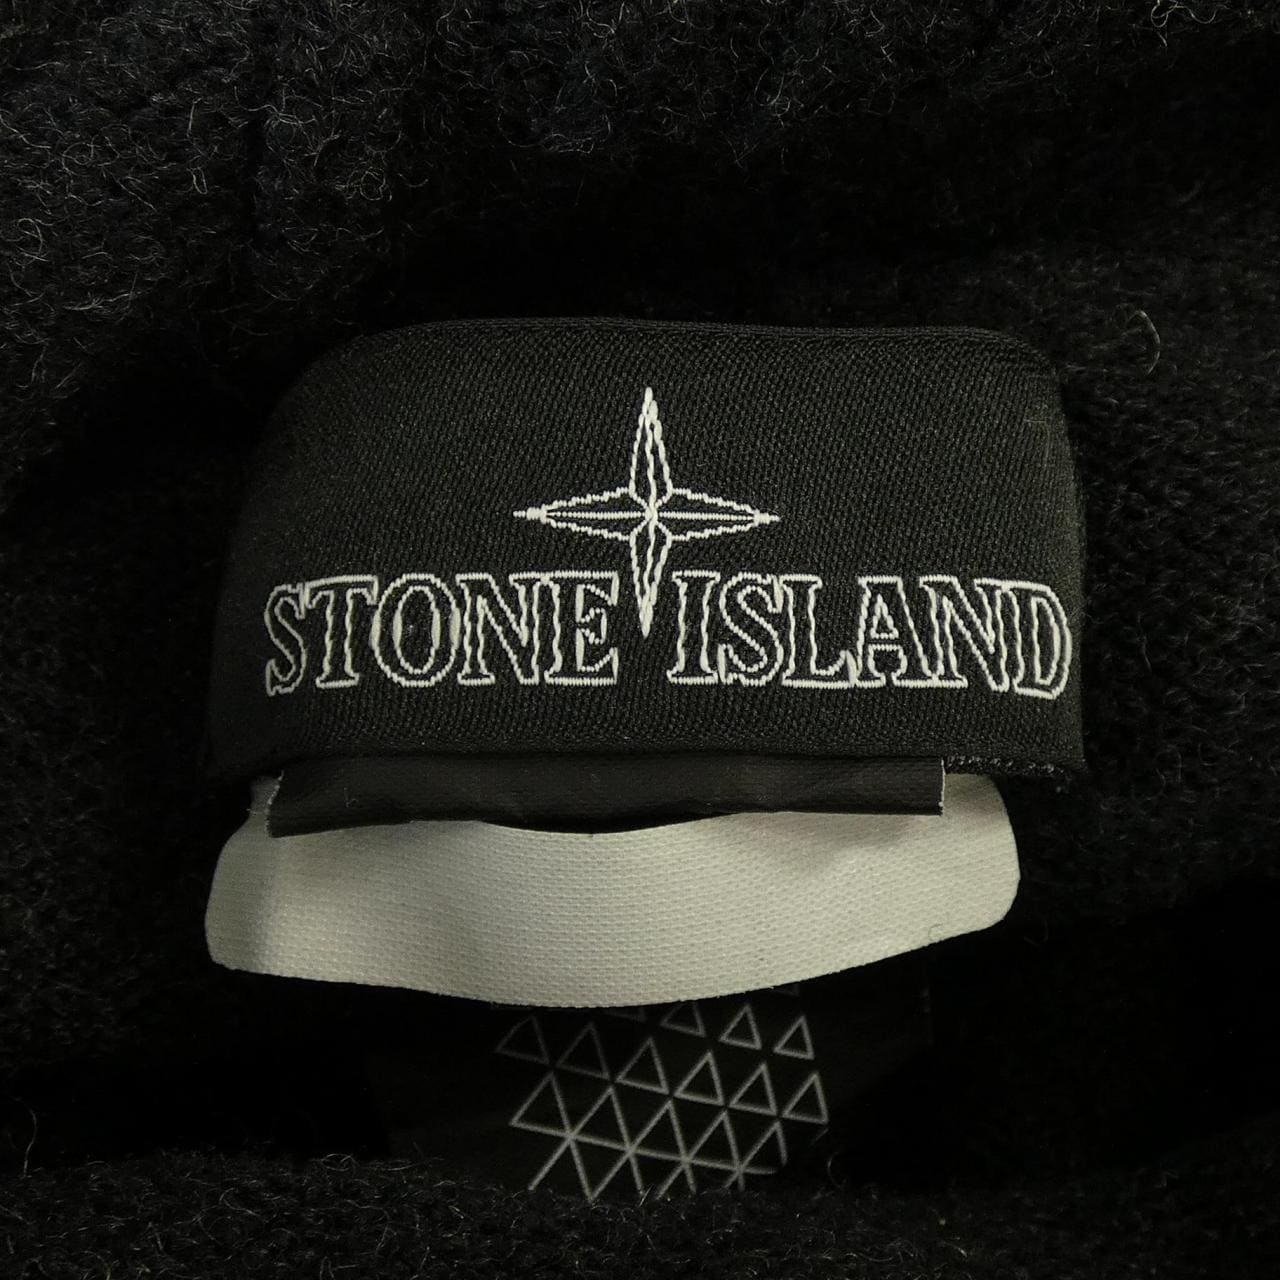 Stone land STONE ISLAND knit